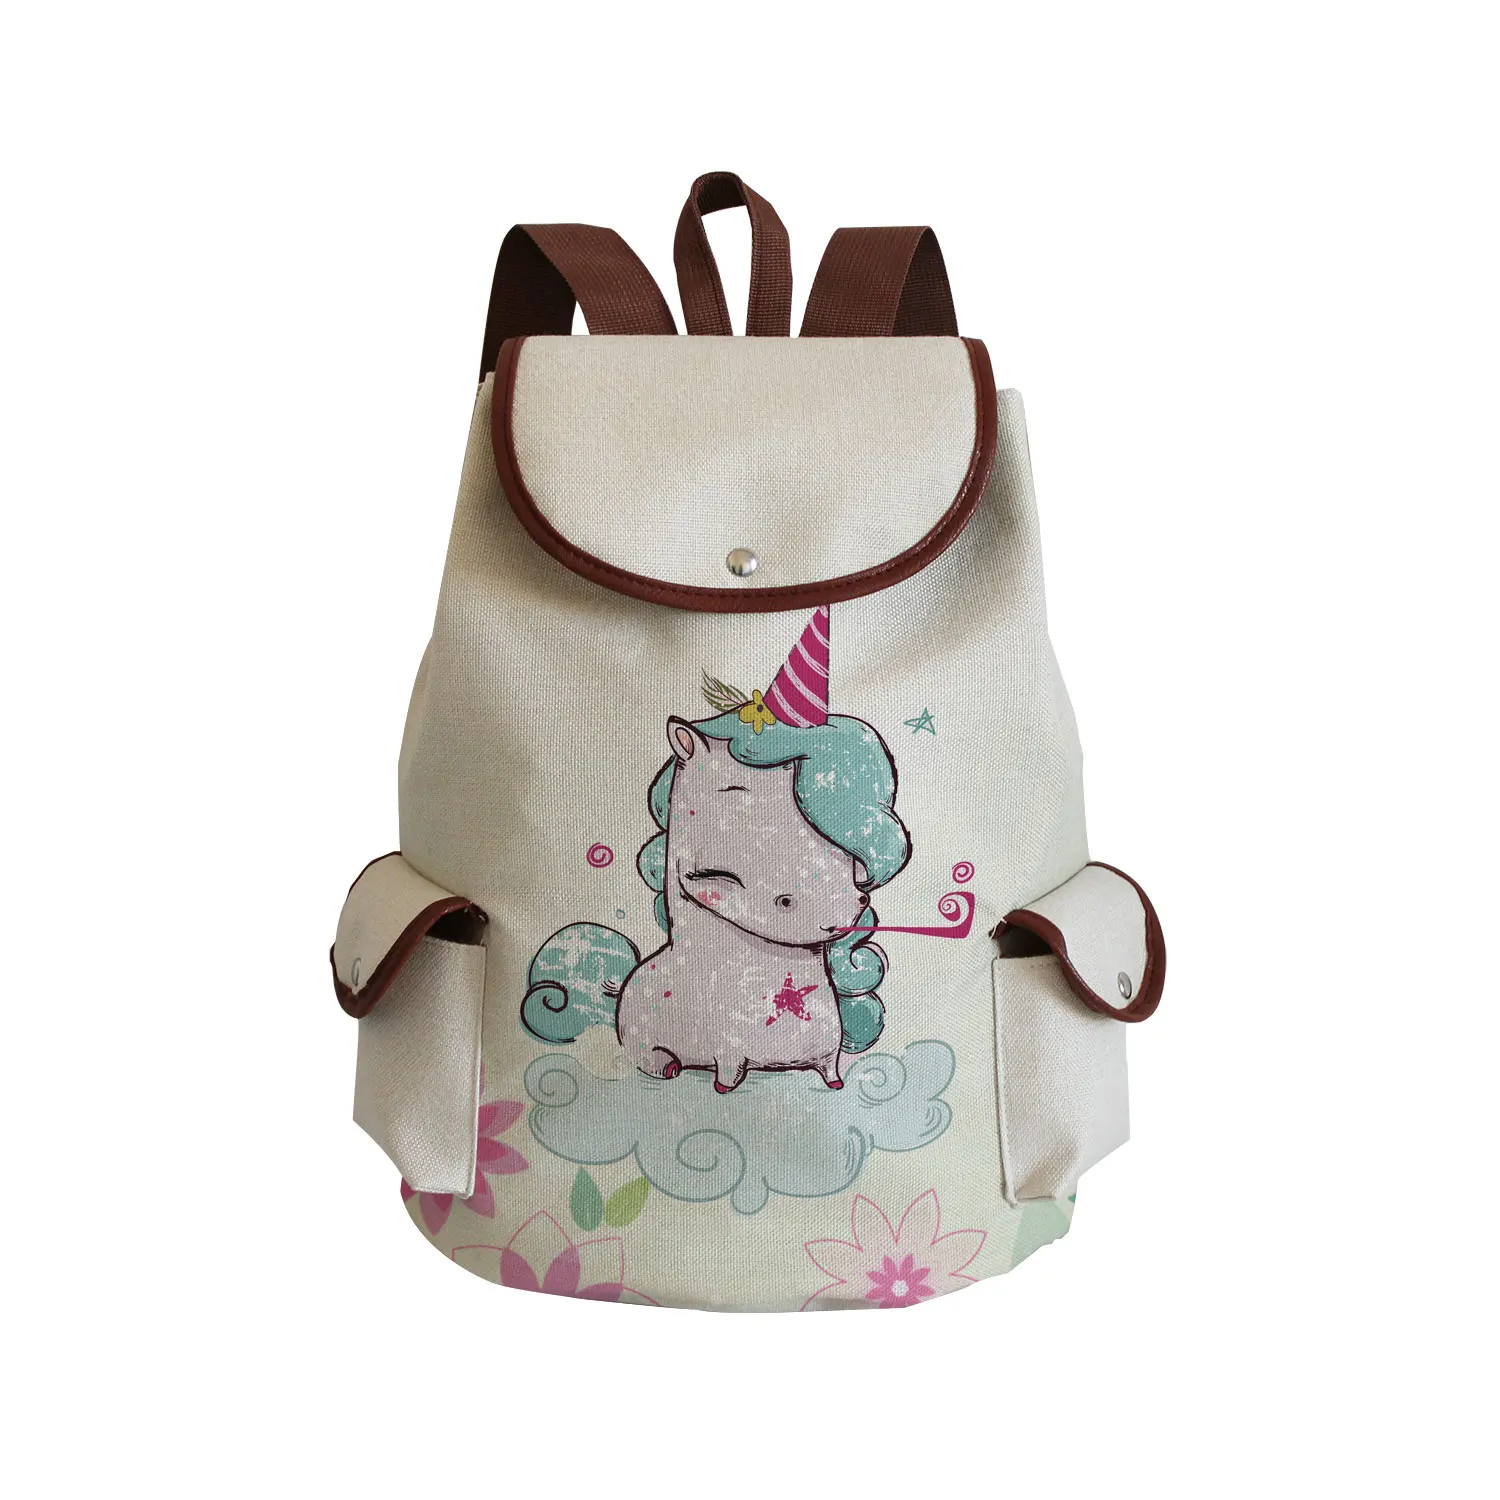 Cute Cartoon Drawstring Backpack Floral Painting Unicorn Printed Handbag Fashion All-Match School Bag Large Capacity Book